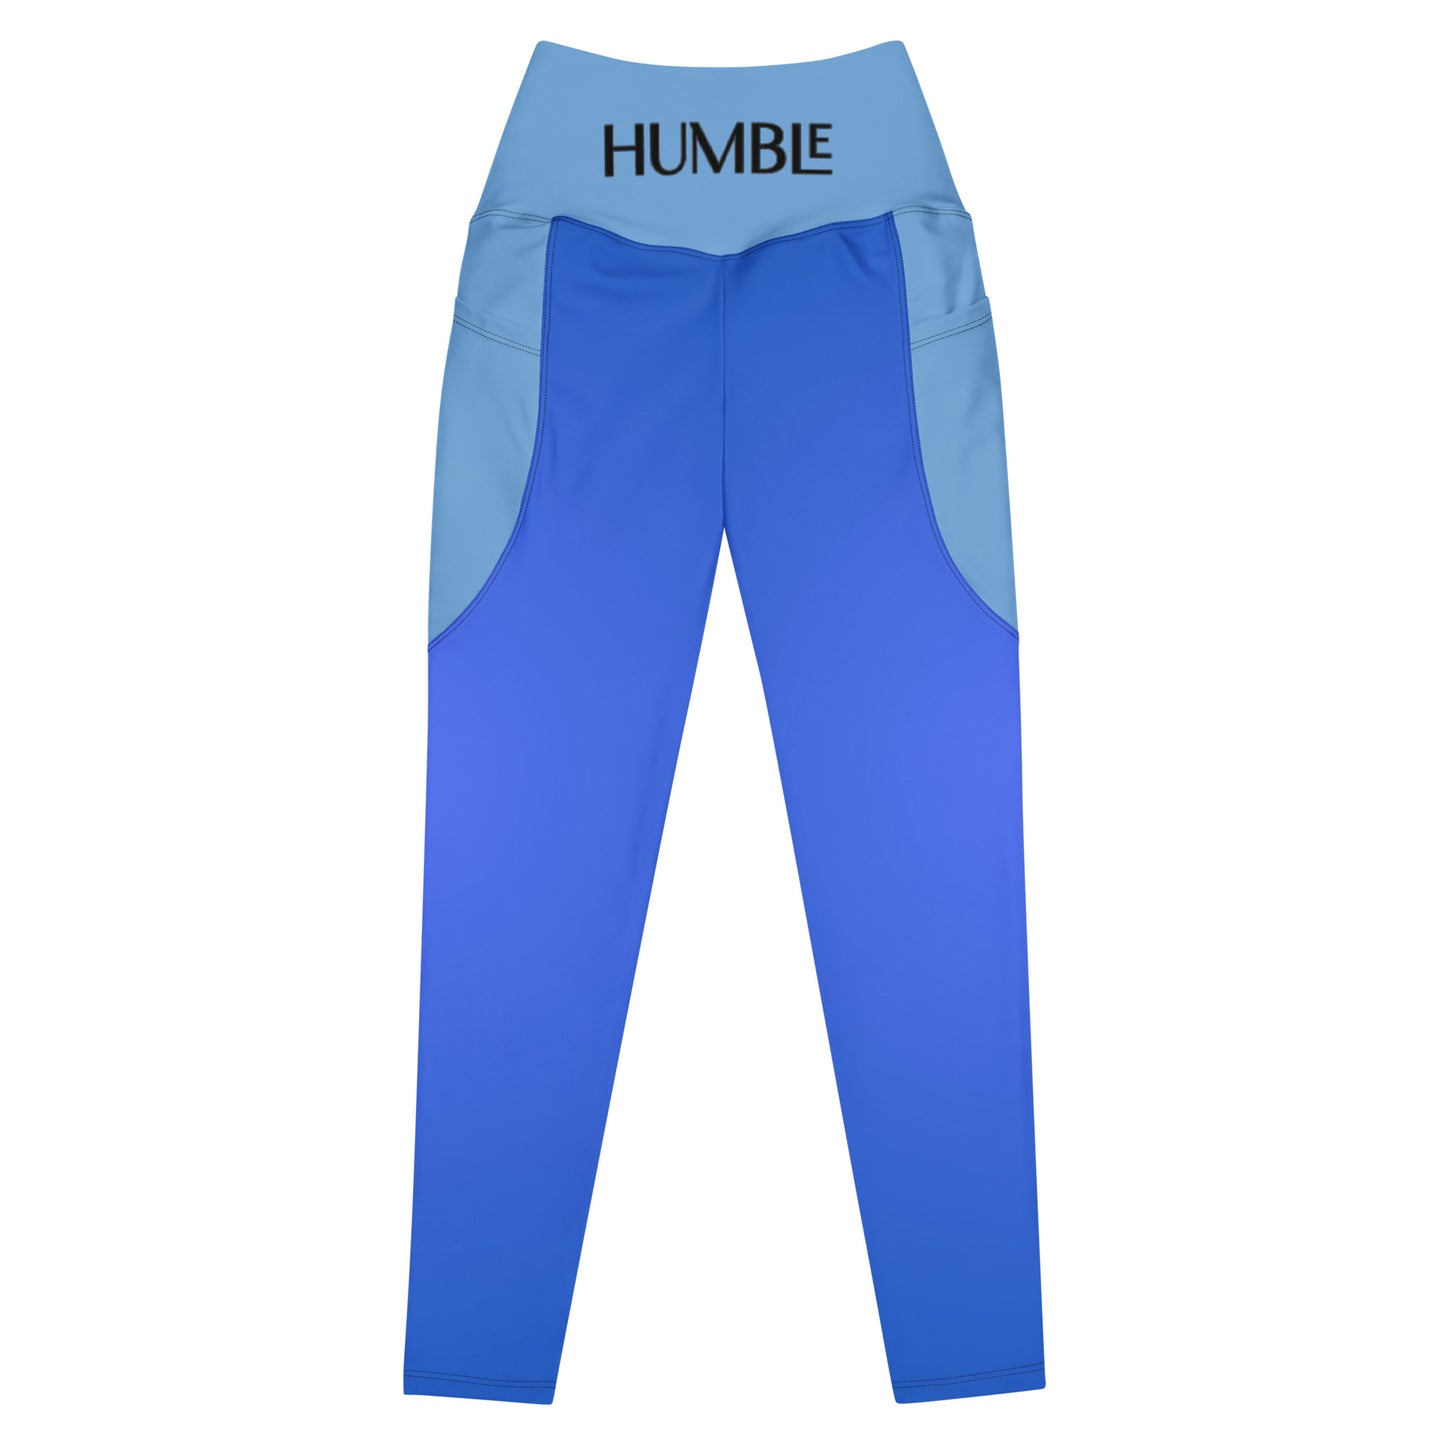 Humble Sportswear™ Women's Royal Blue Active Compression Leggings - Mireille Fine Art